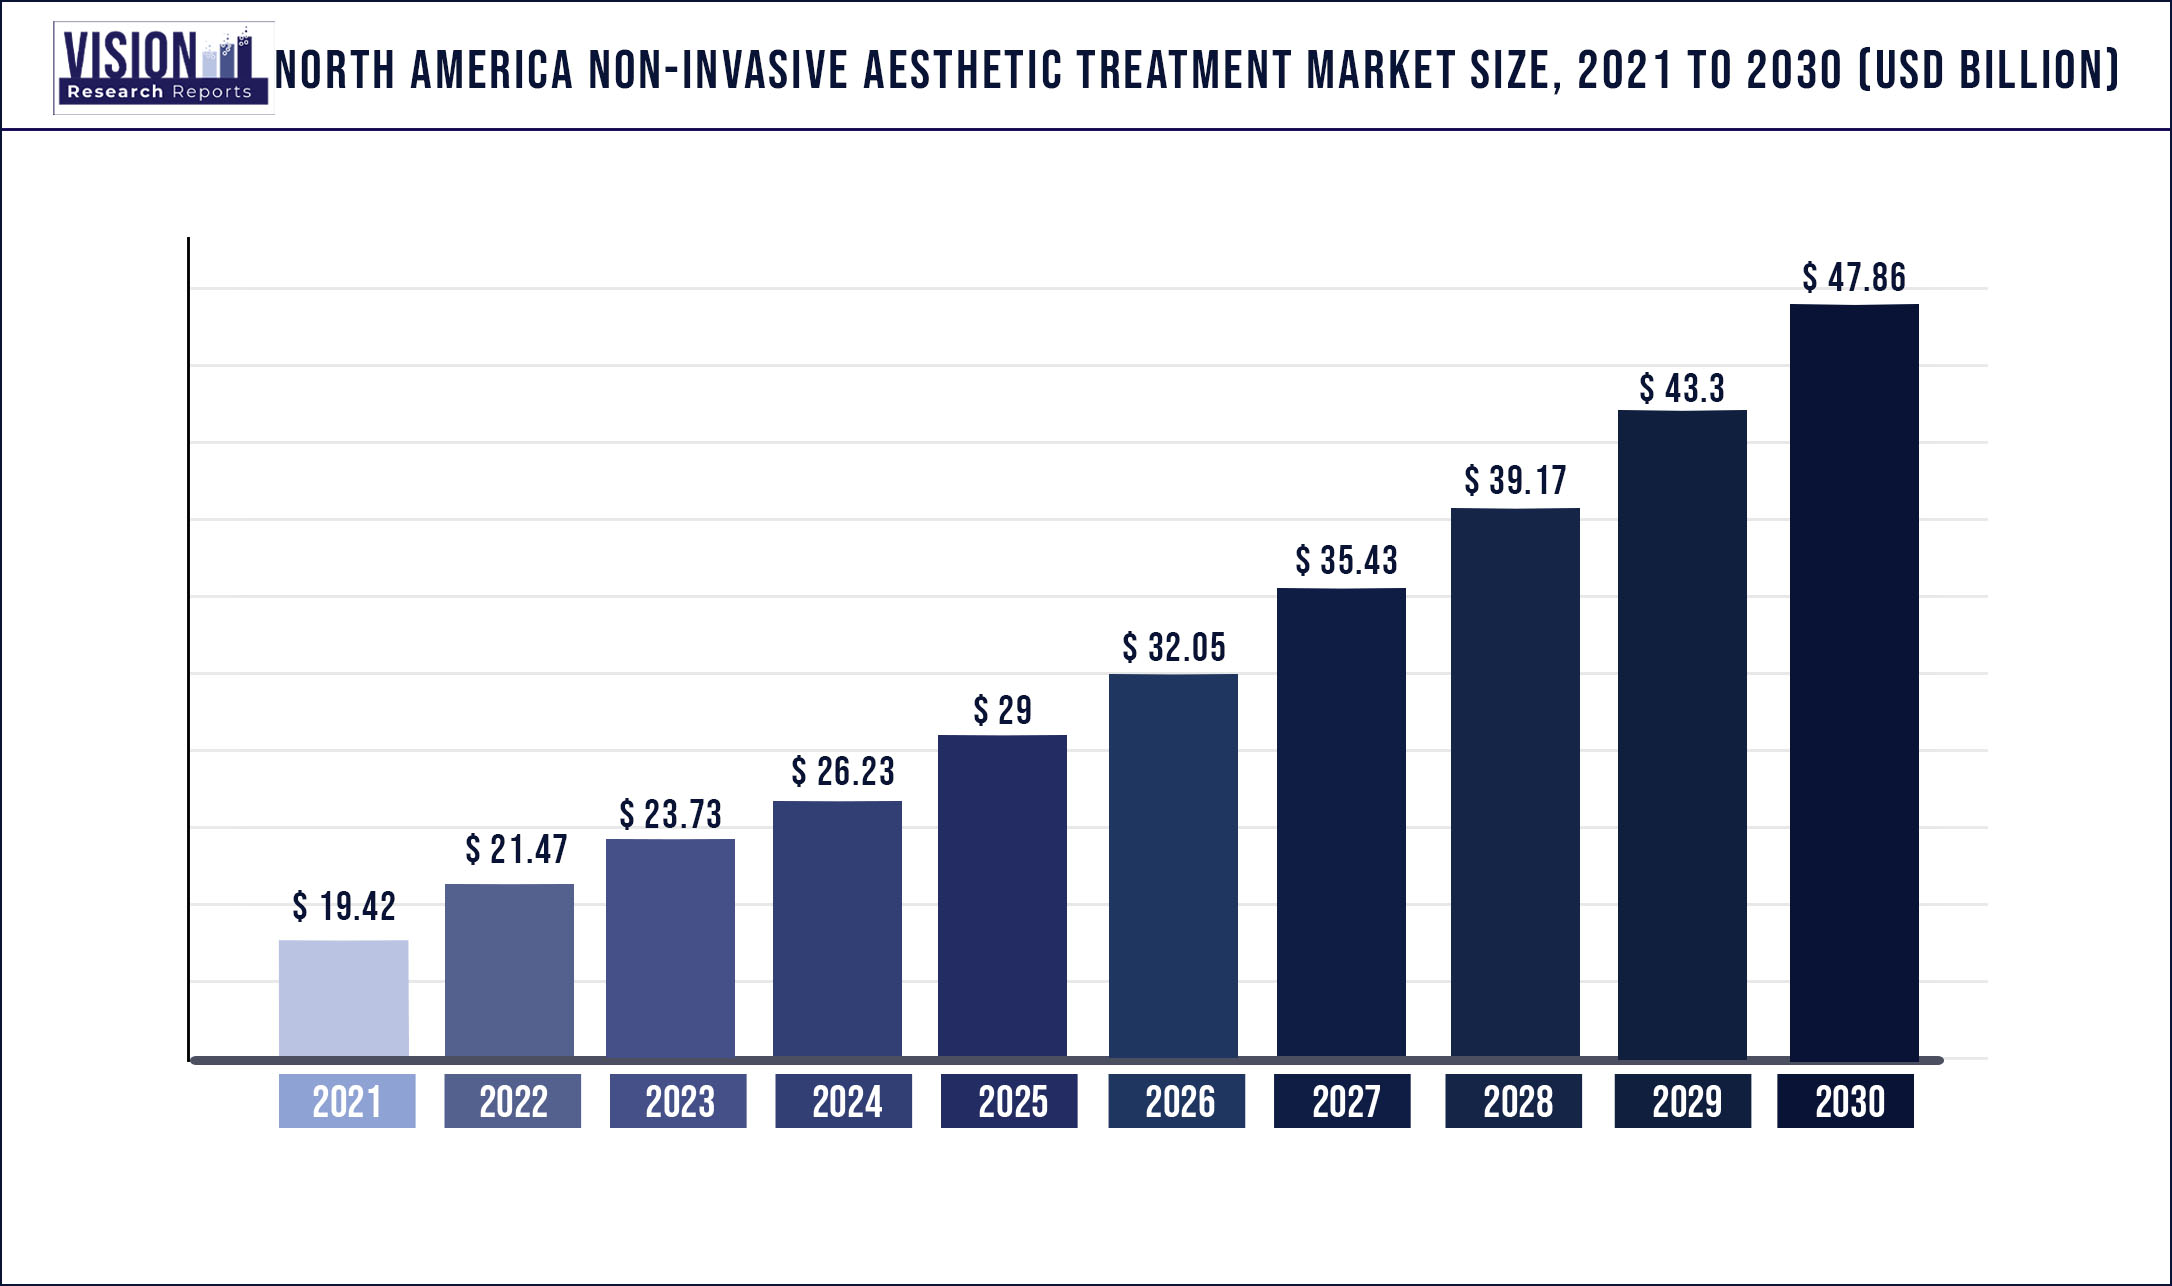 North America Non-invasive Aesthetic Treatment Market Size 2021 to 2030